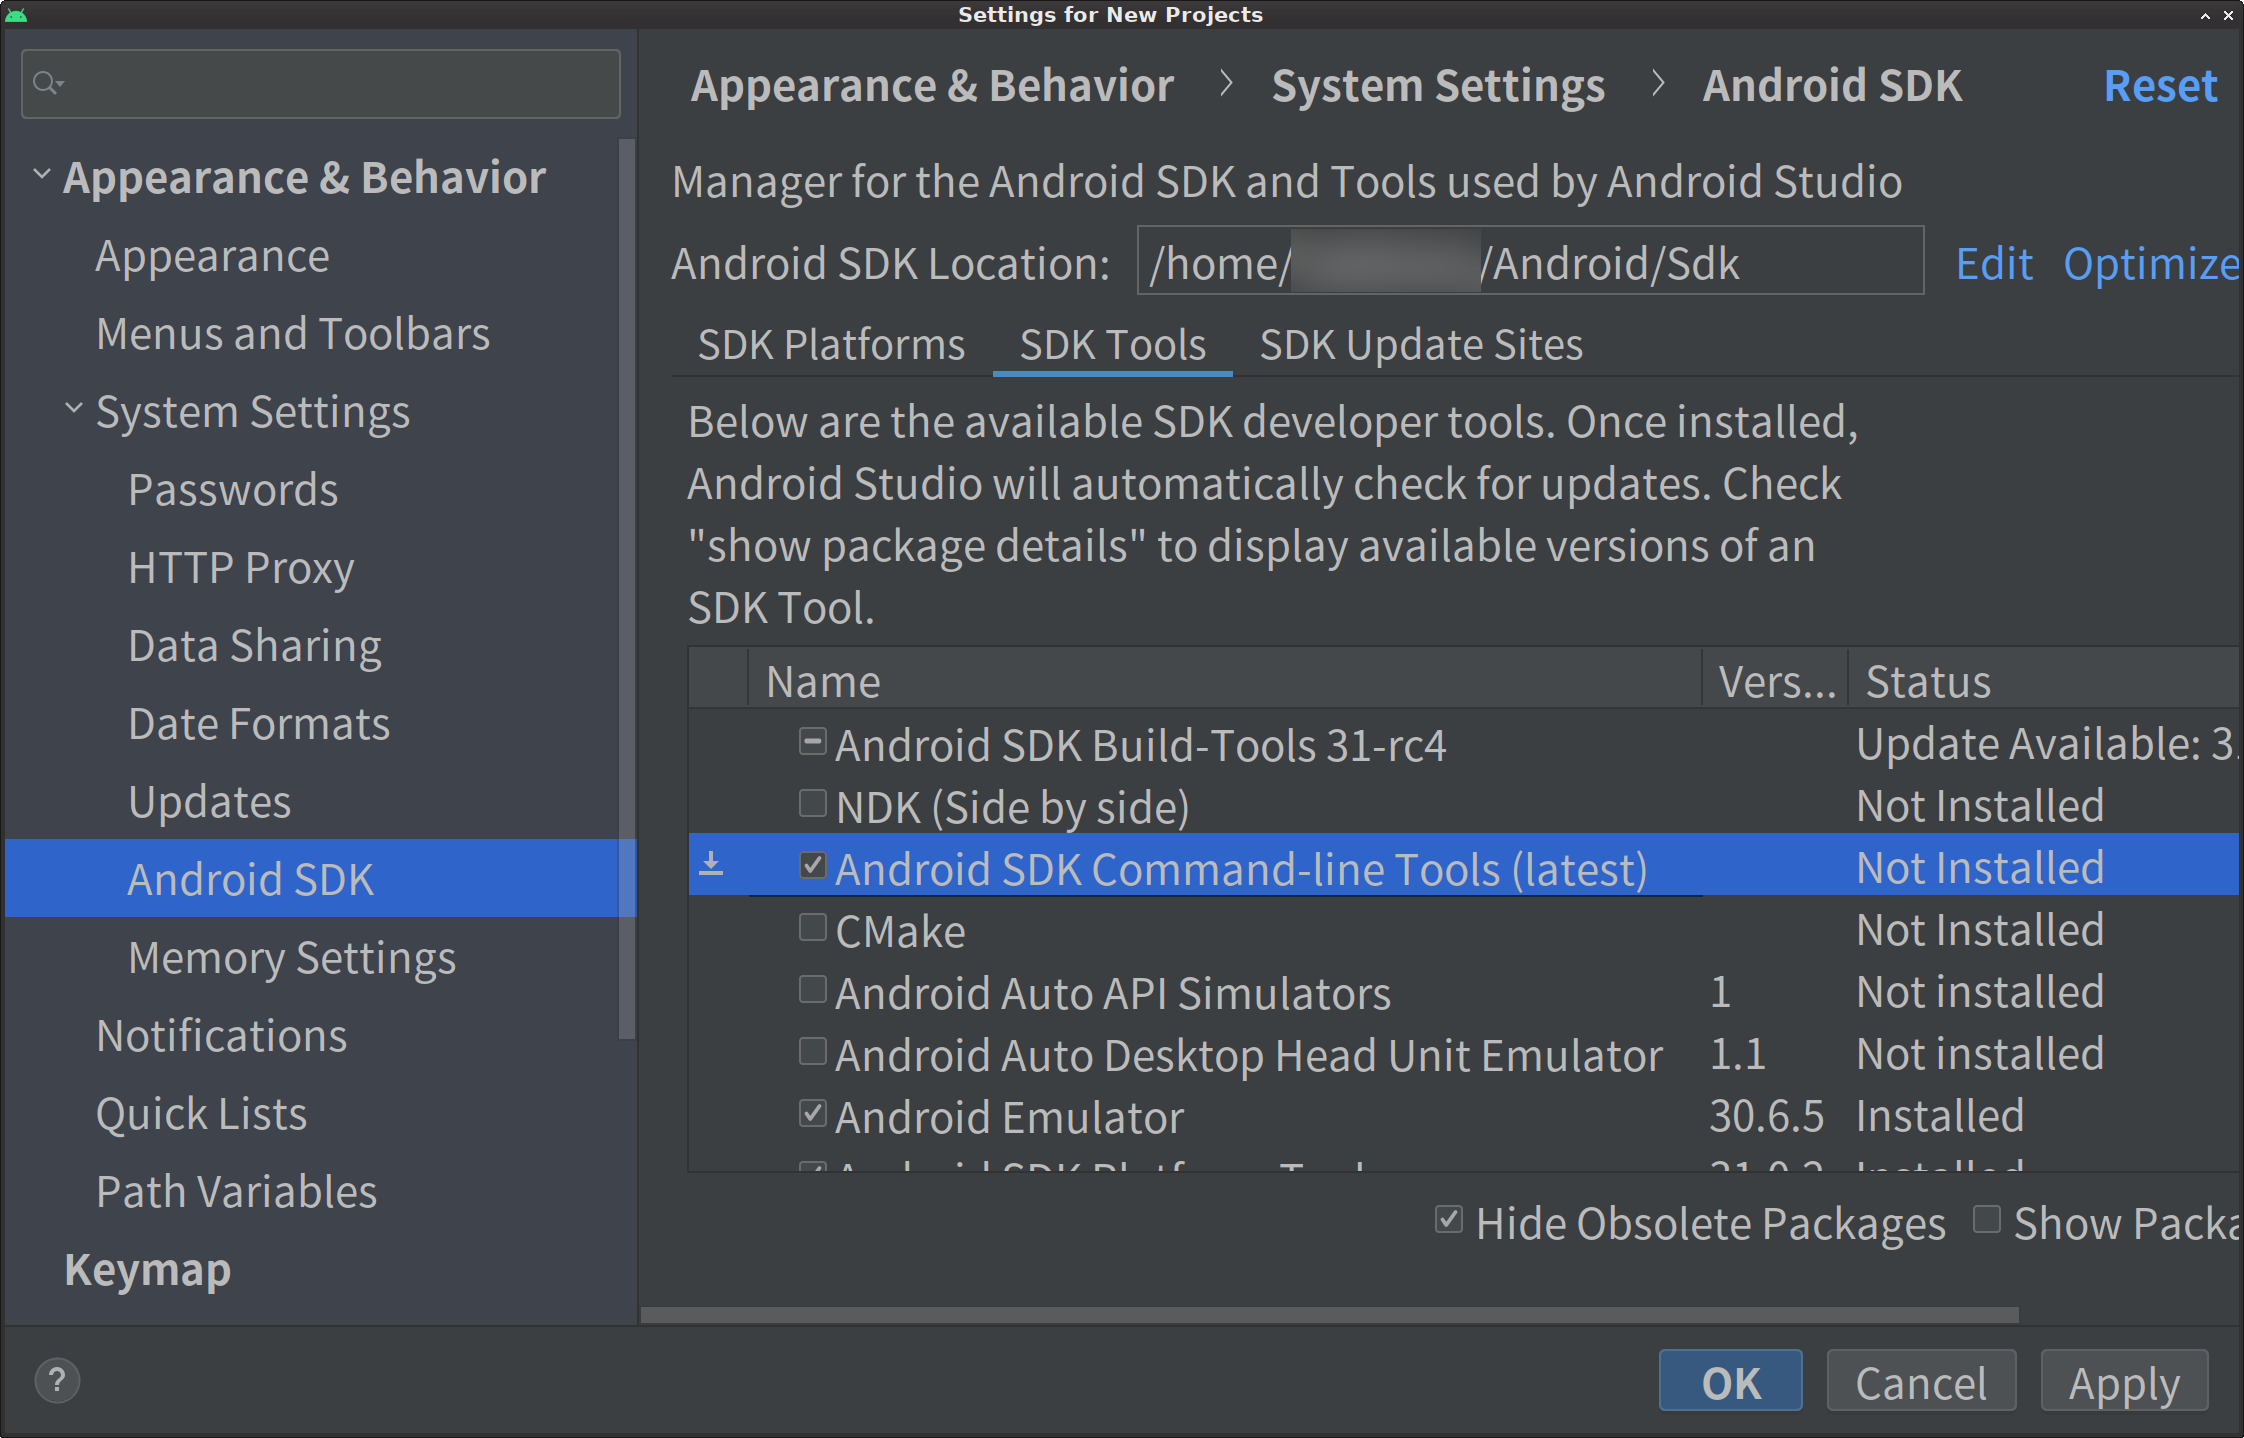 Android Studio Settings